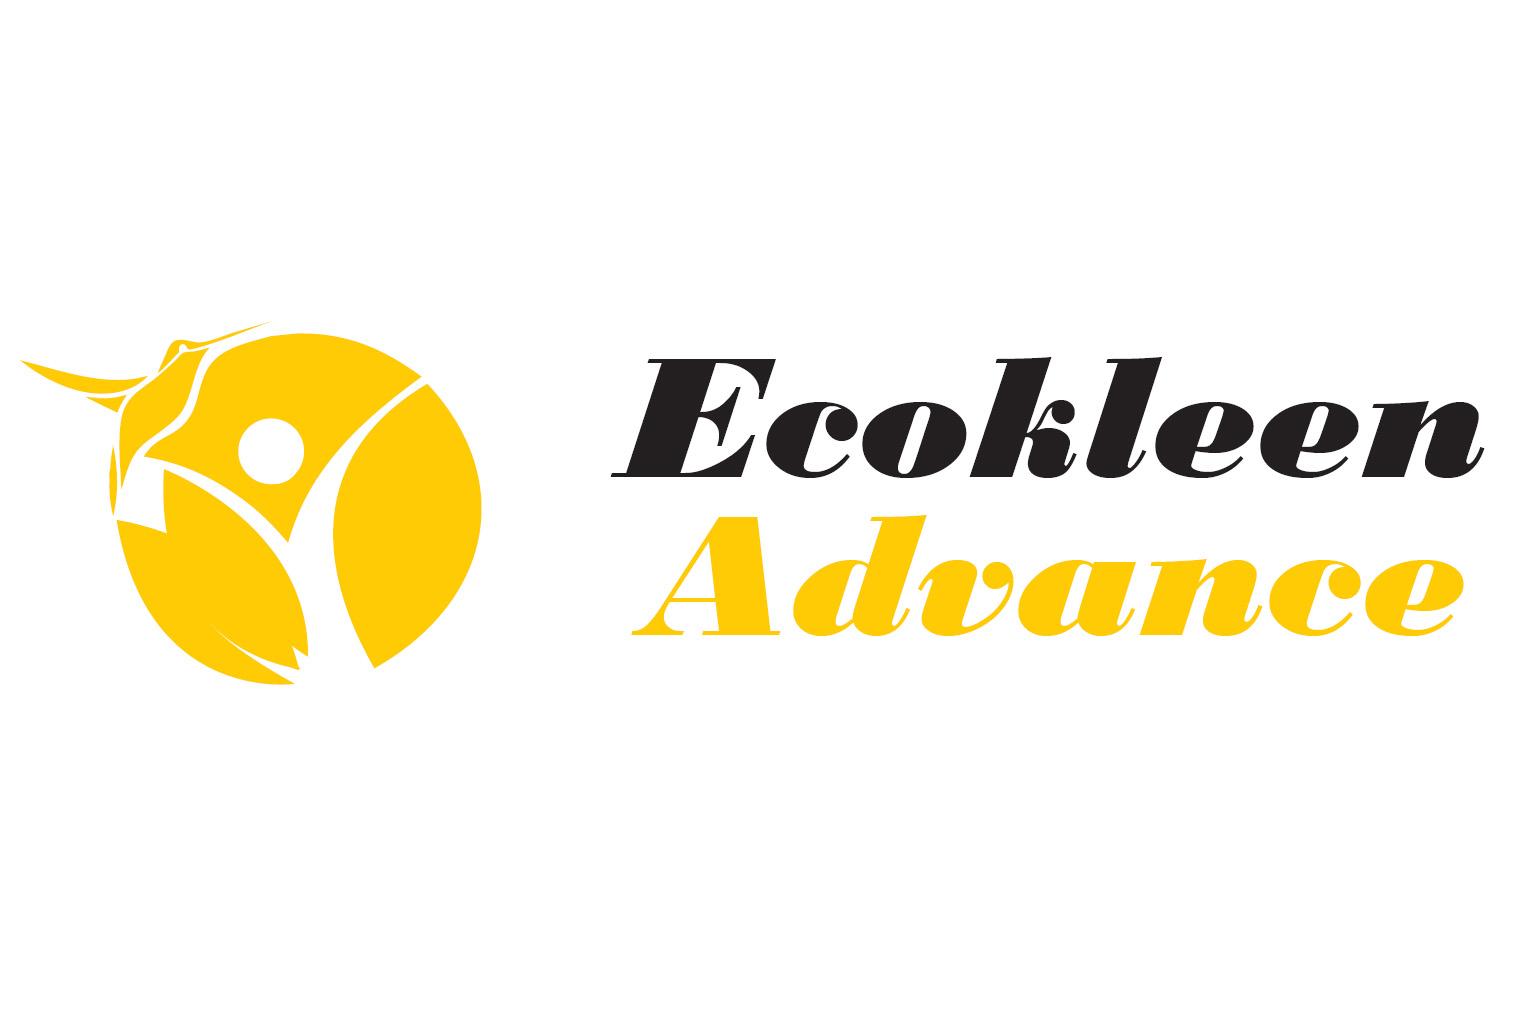 Product: Ecokleen Advance - Prime Pharma